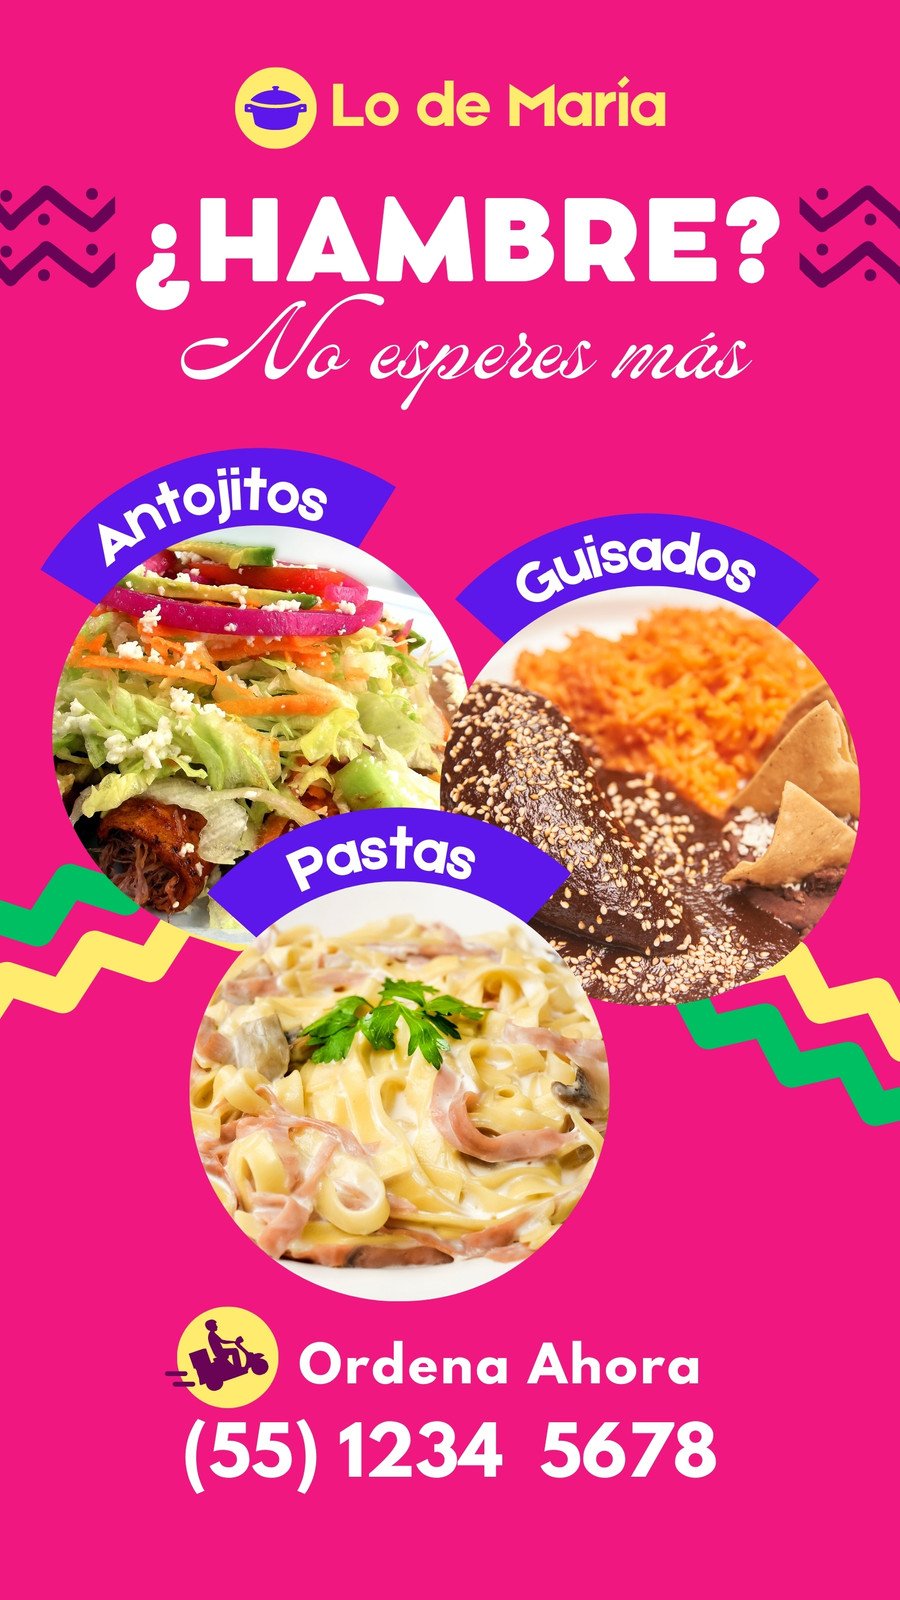 https://marketplace.canva.com/EAFfSxDQ5MU/1/0/900w/canva-historia-de-instagram-para-restaurante-de-comida-mexicana-jPOv7tMUoqM.jpg